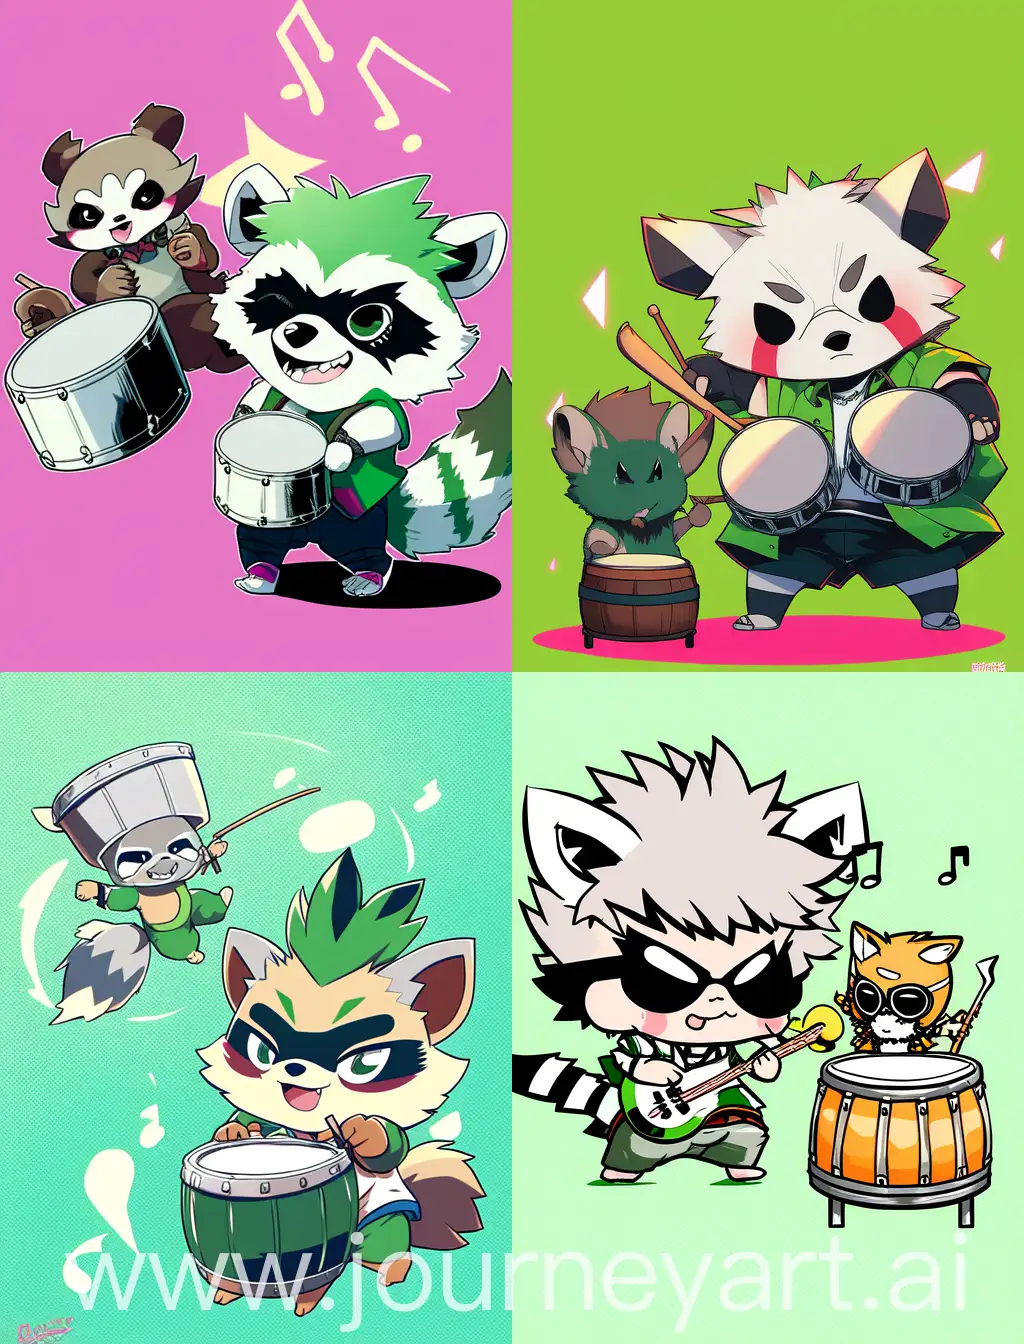 Chibi-Raccoon-and-Anime-Guy-Drumming-in-Vibrant-Green-Setting